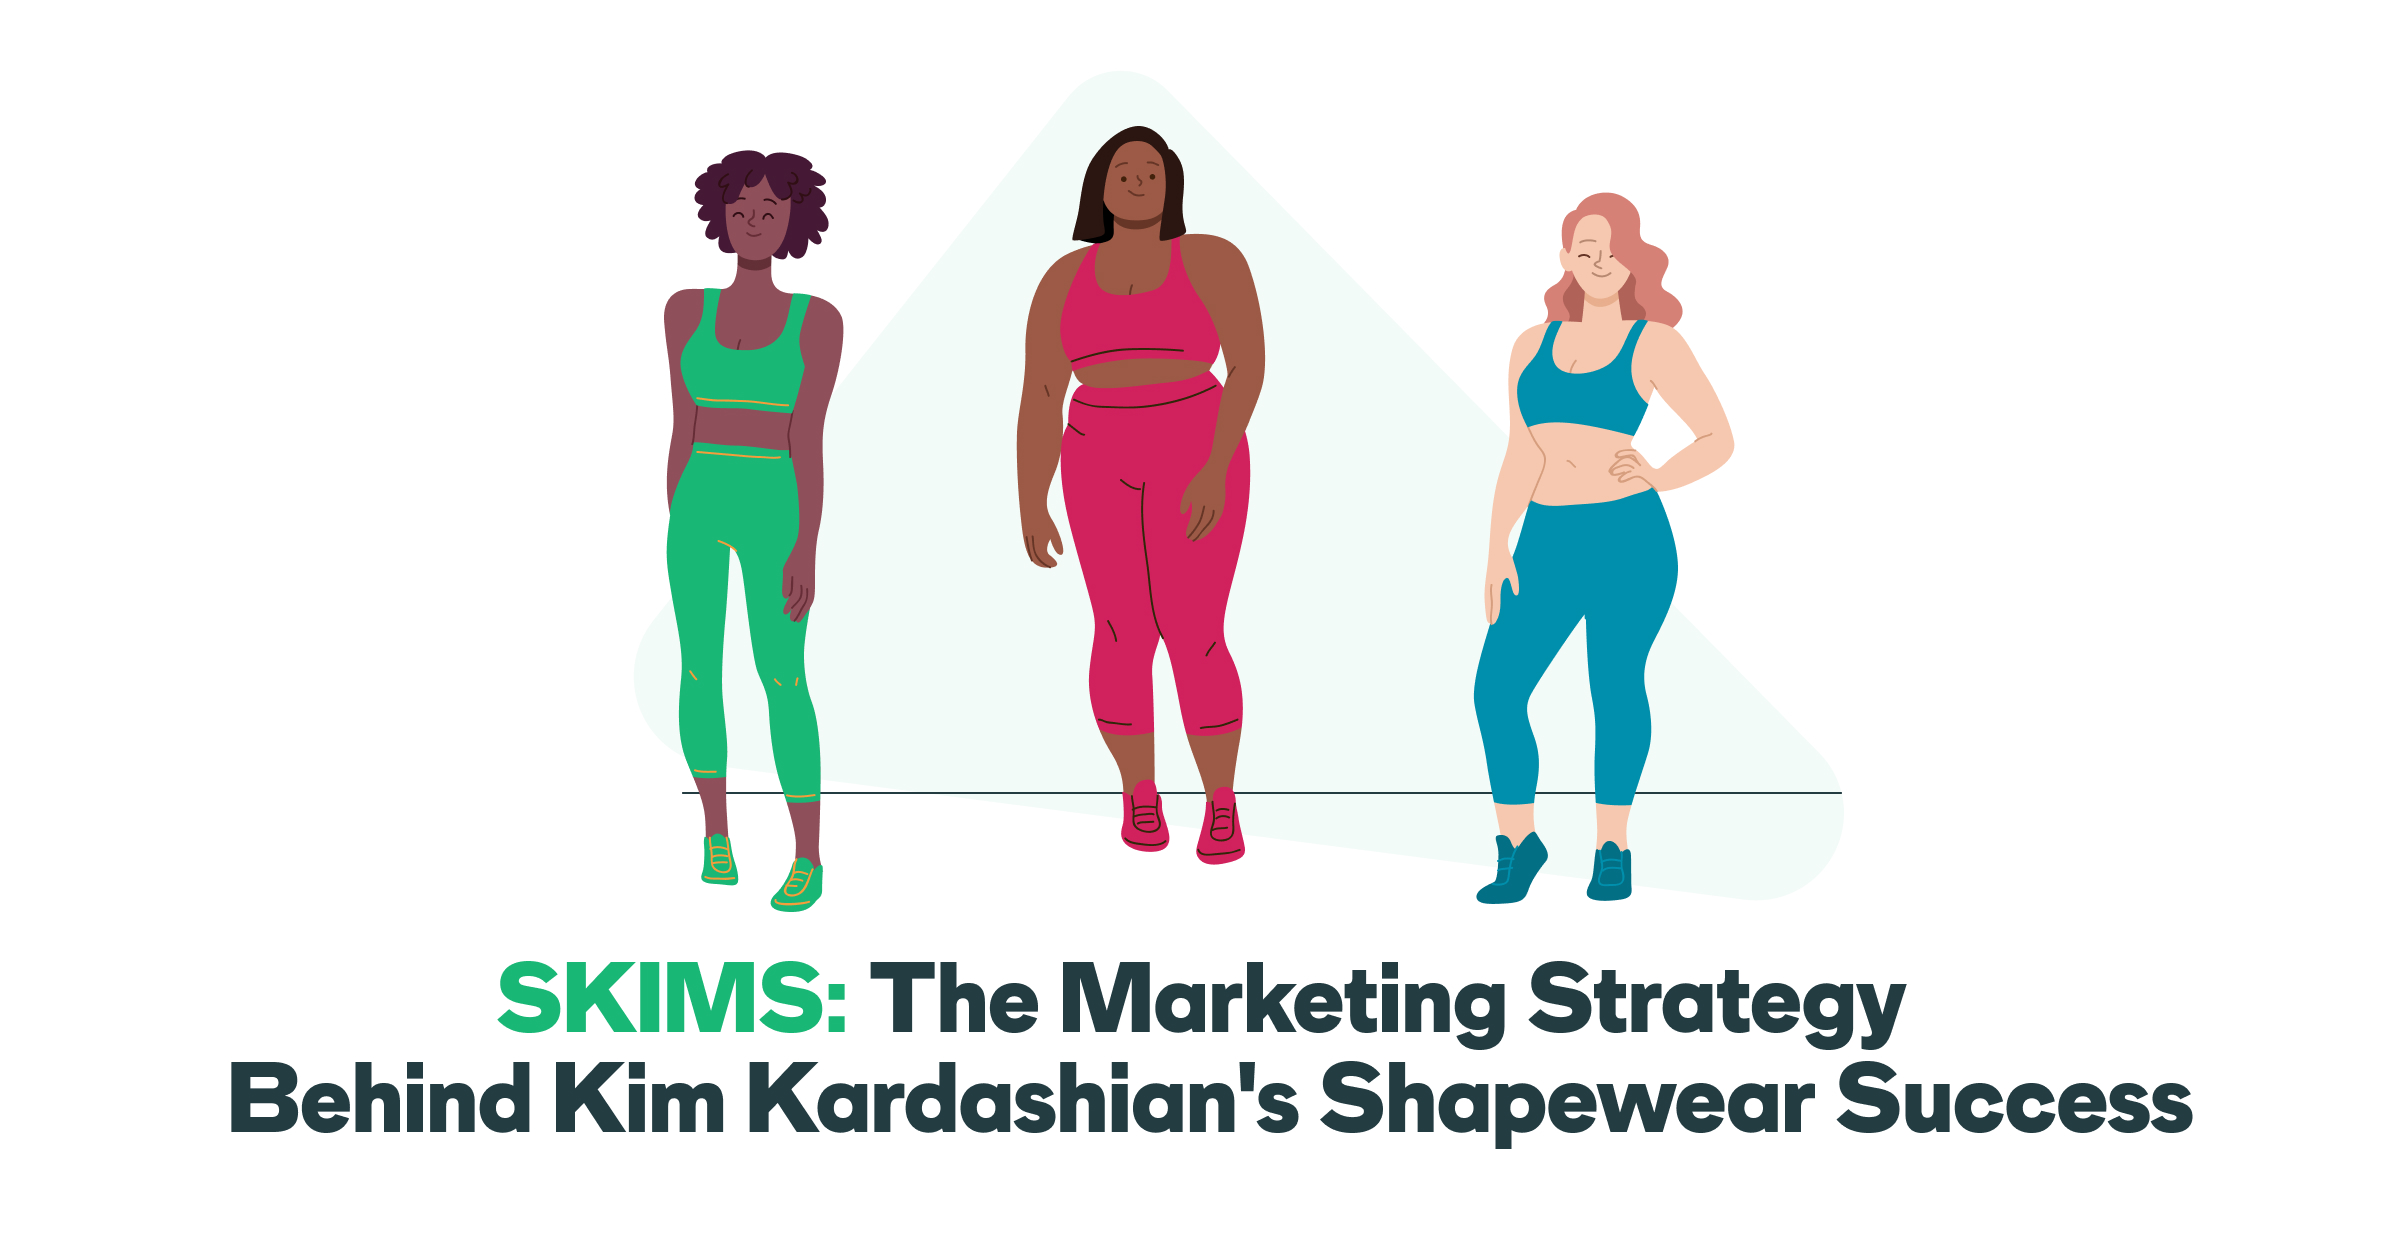 SKIMS: The Marketing Strategy Behind Kim Kardashian's Shapewear Success